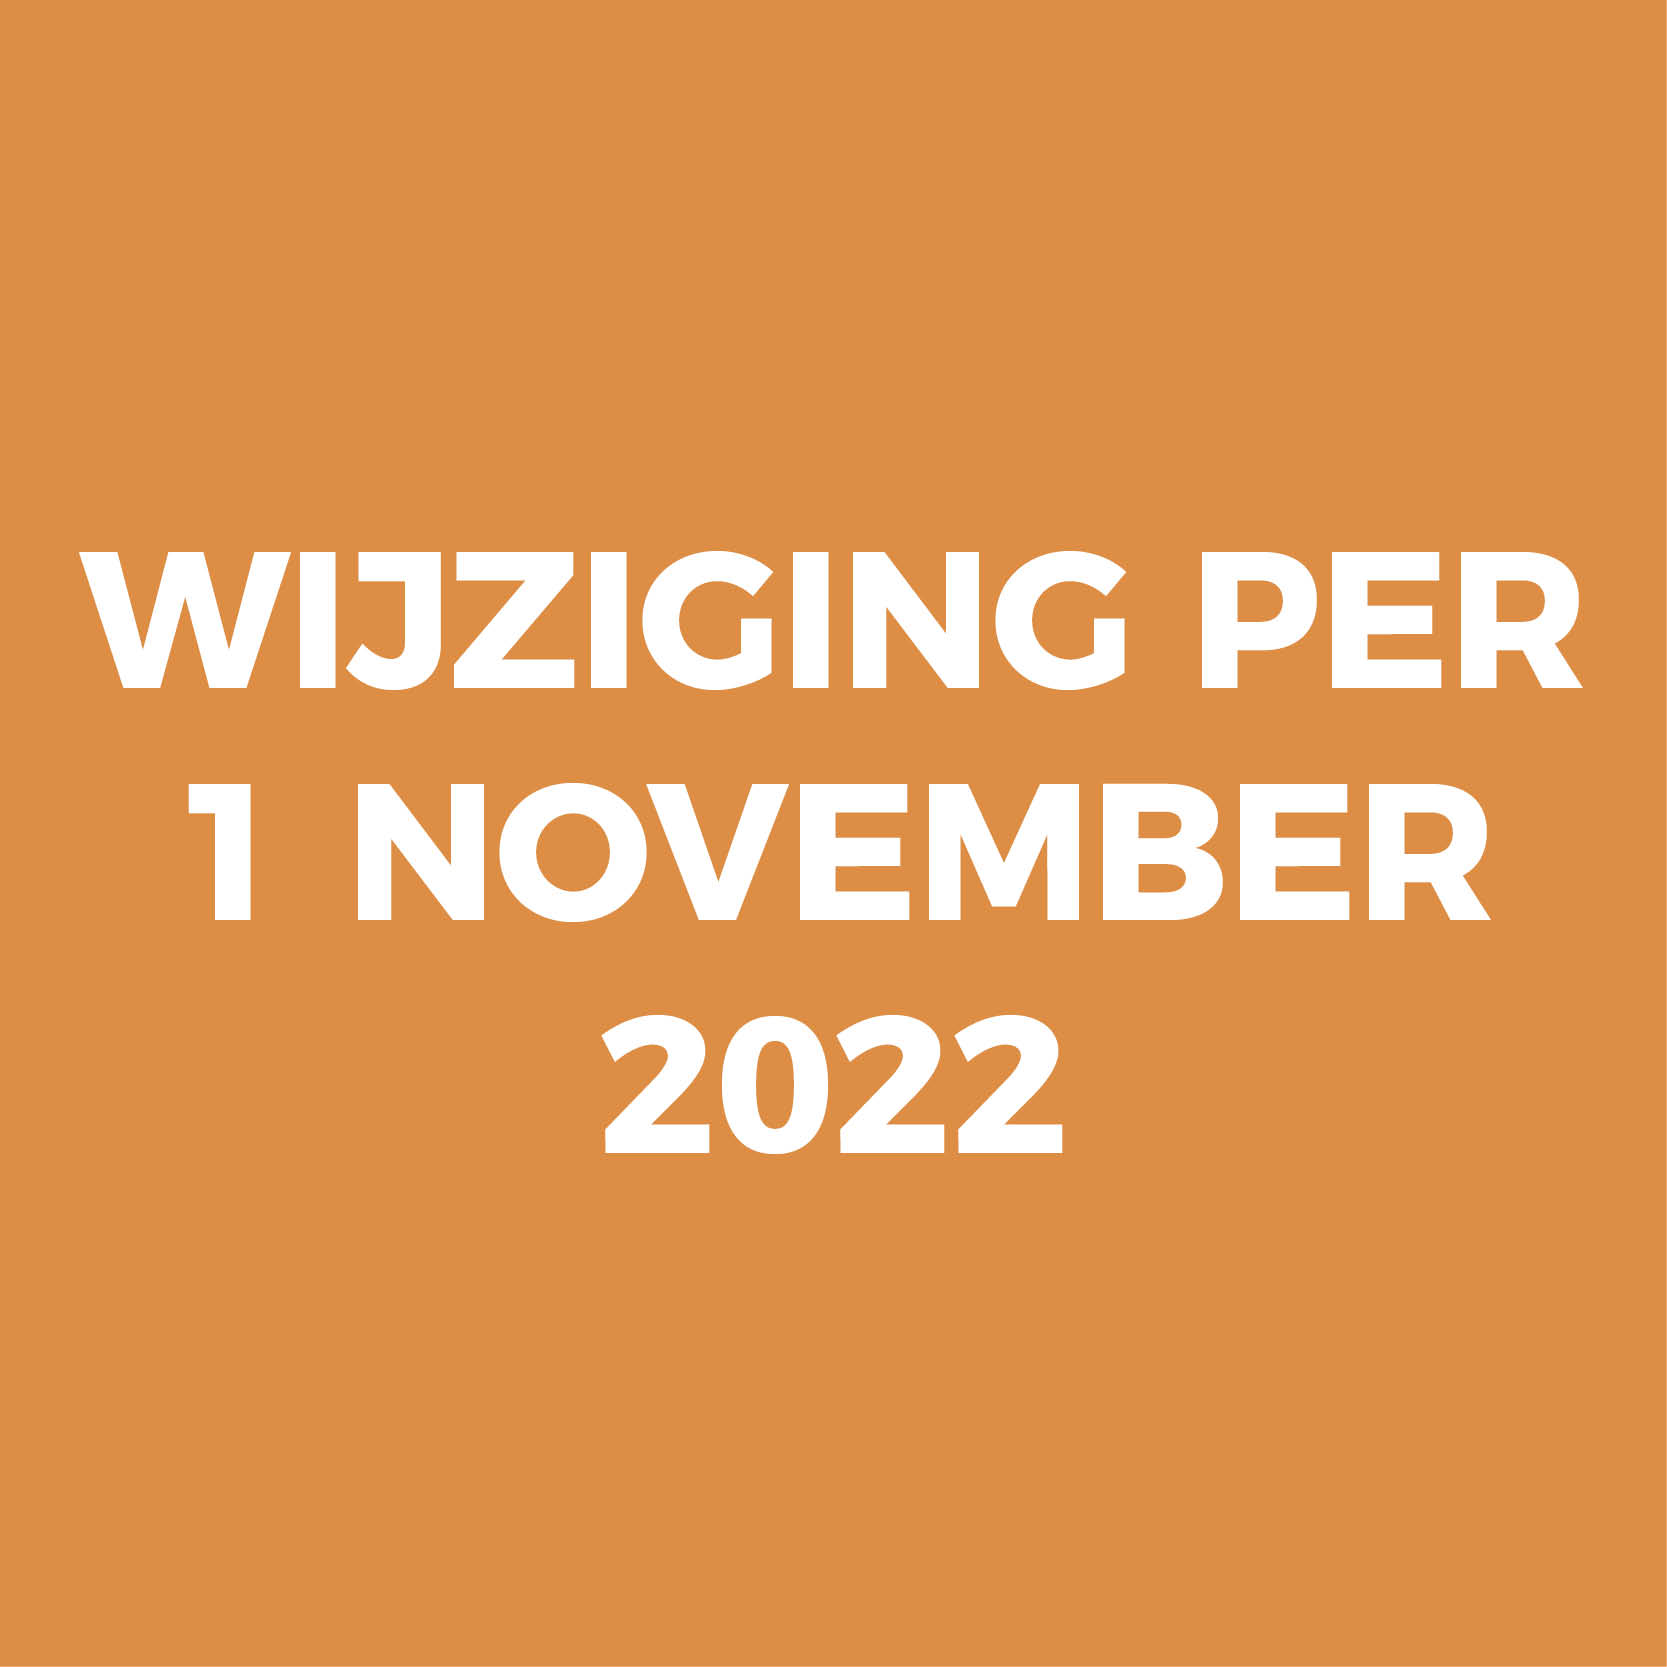 Wijziging per 1 november 2022